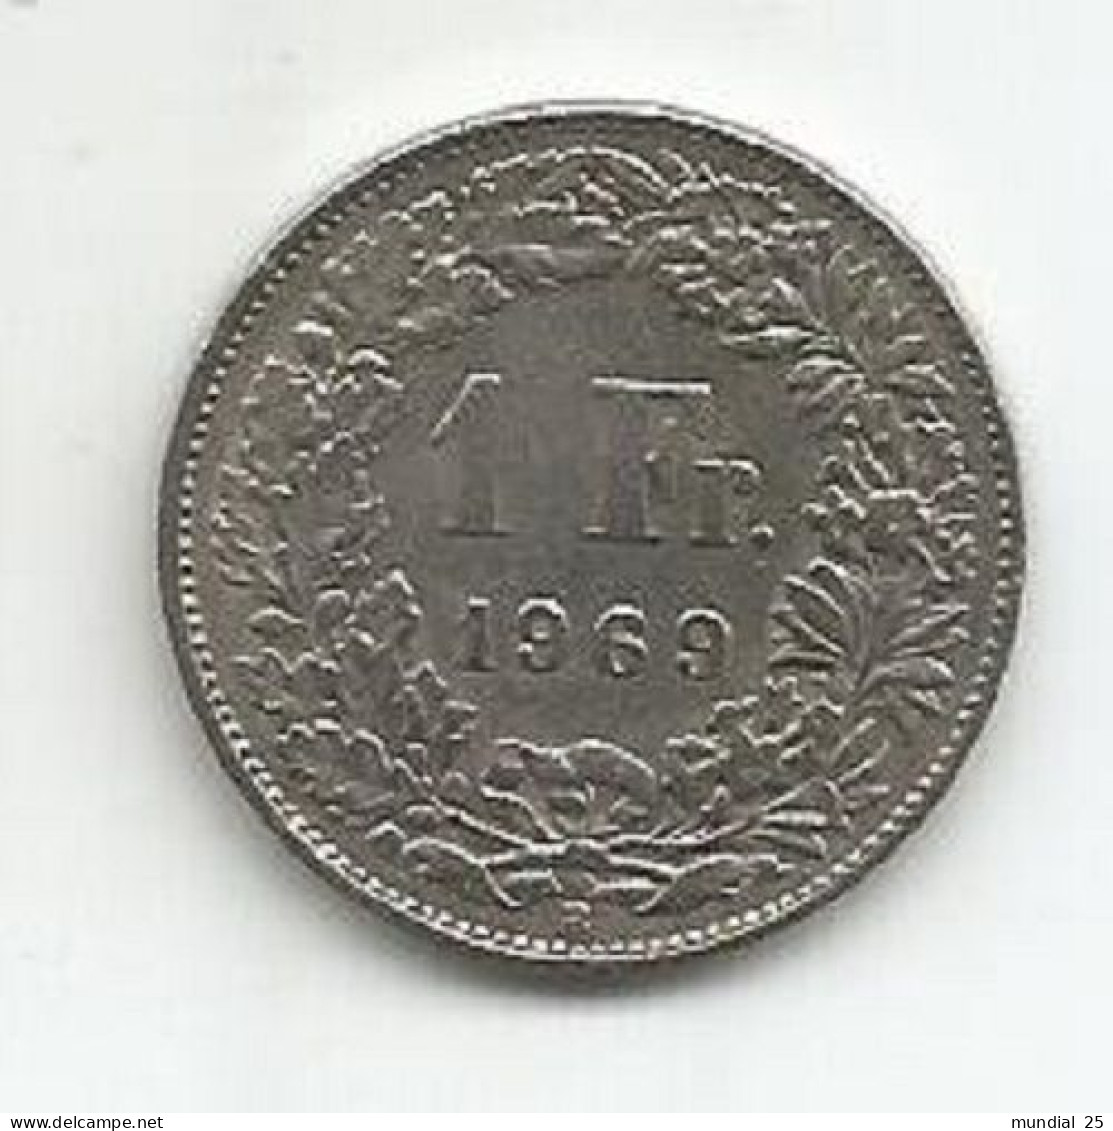 SWITZERLAND 1 FRANC 1969 B - 1 Franken